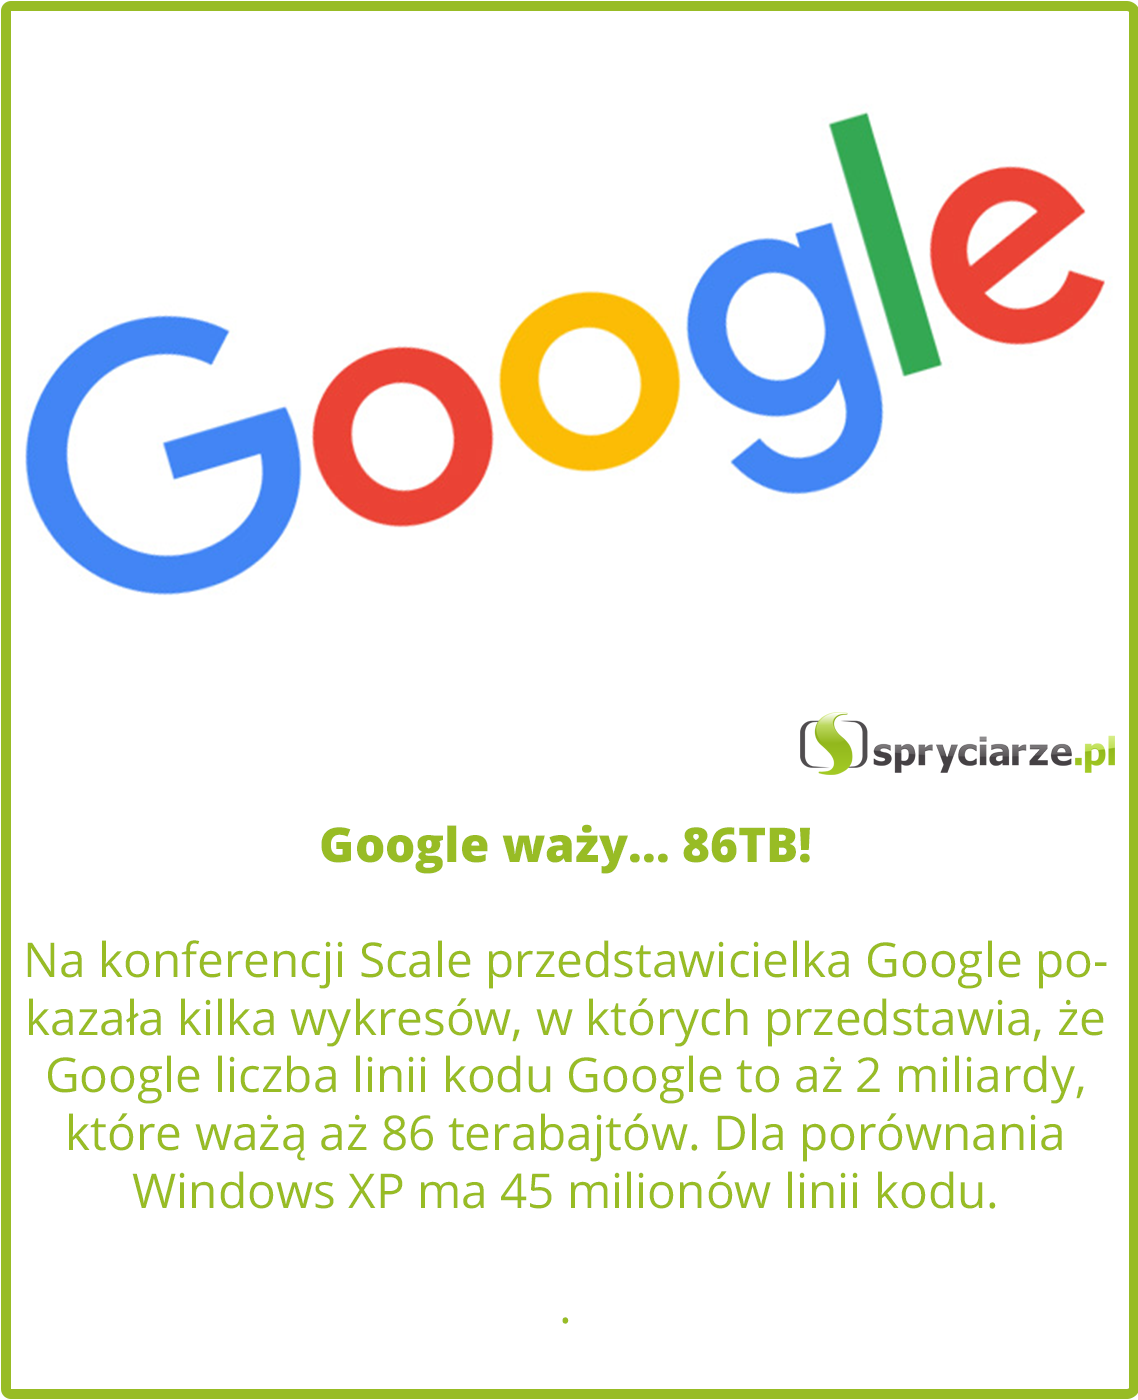 Google waży 86TB